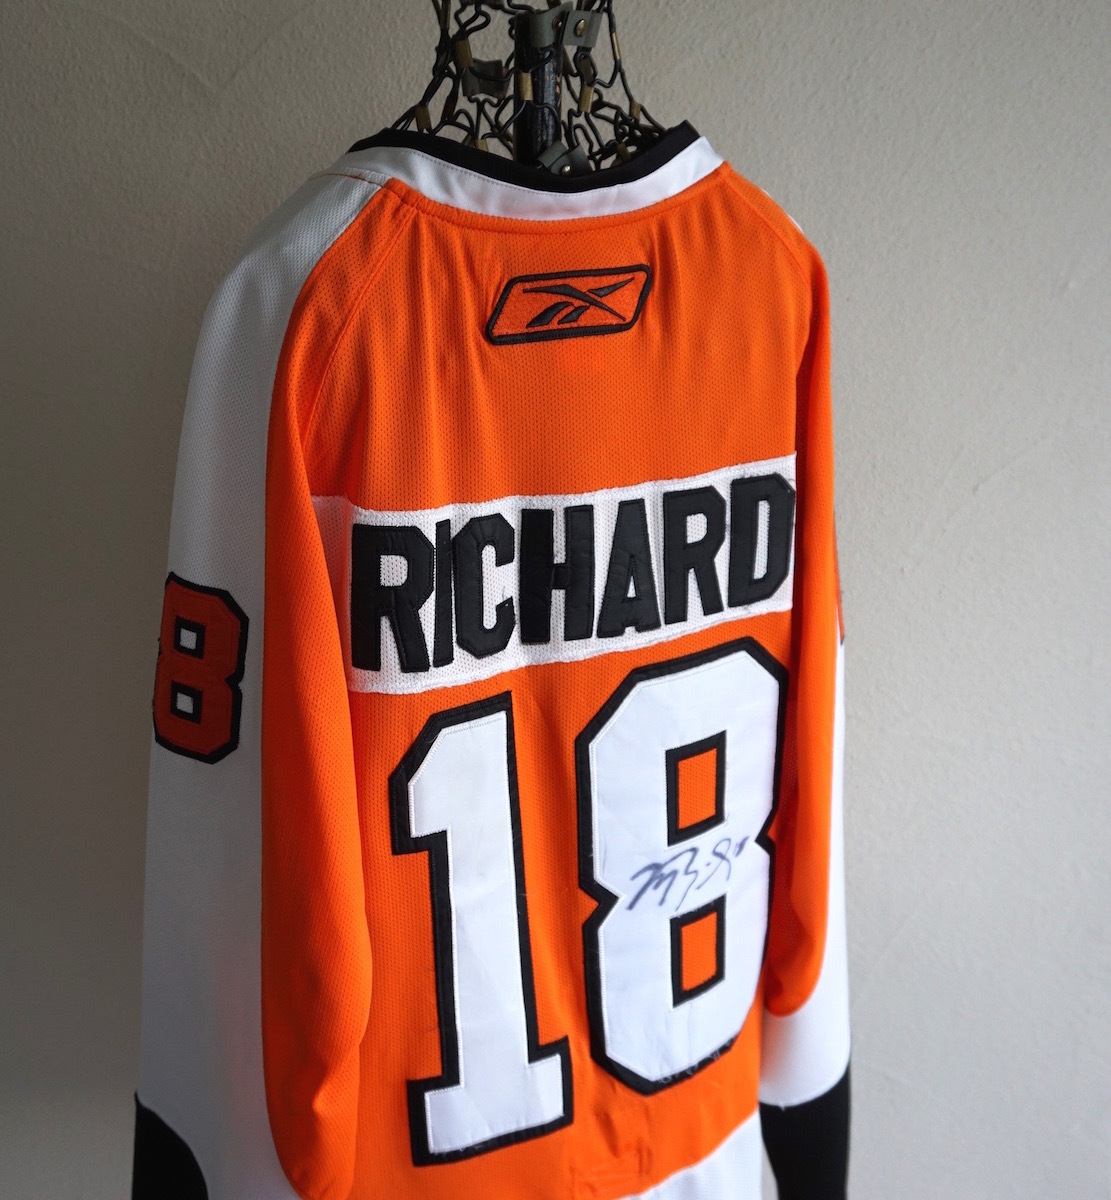 2000s Reebok NHL Philadelphia Fryers #18 Mike Richards レプリカユニフォーム アイスホッケーゲームジャージ 直筆サイン入り 50 XL 古着